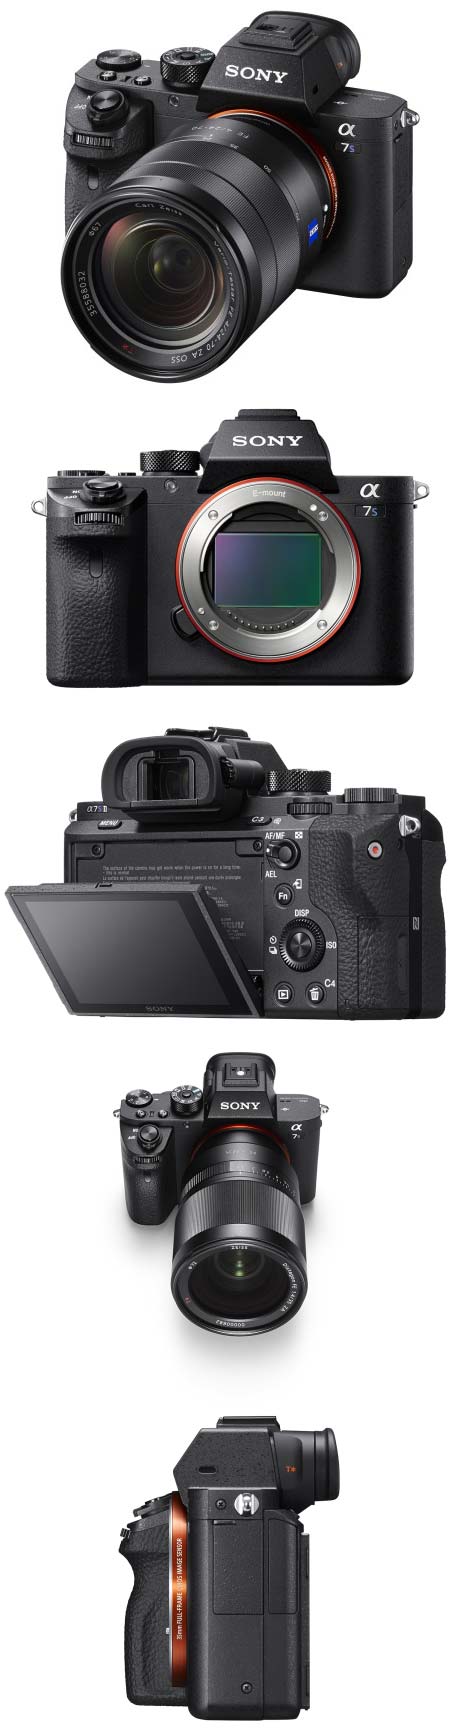 Цифровая фотокамера Sony Alpha 7s II